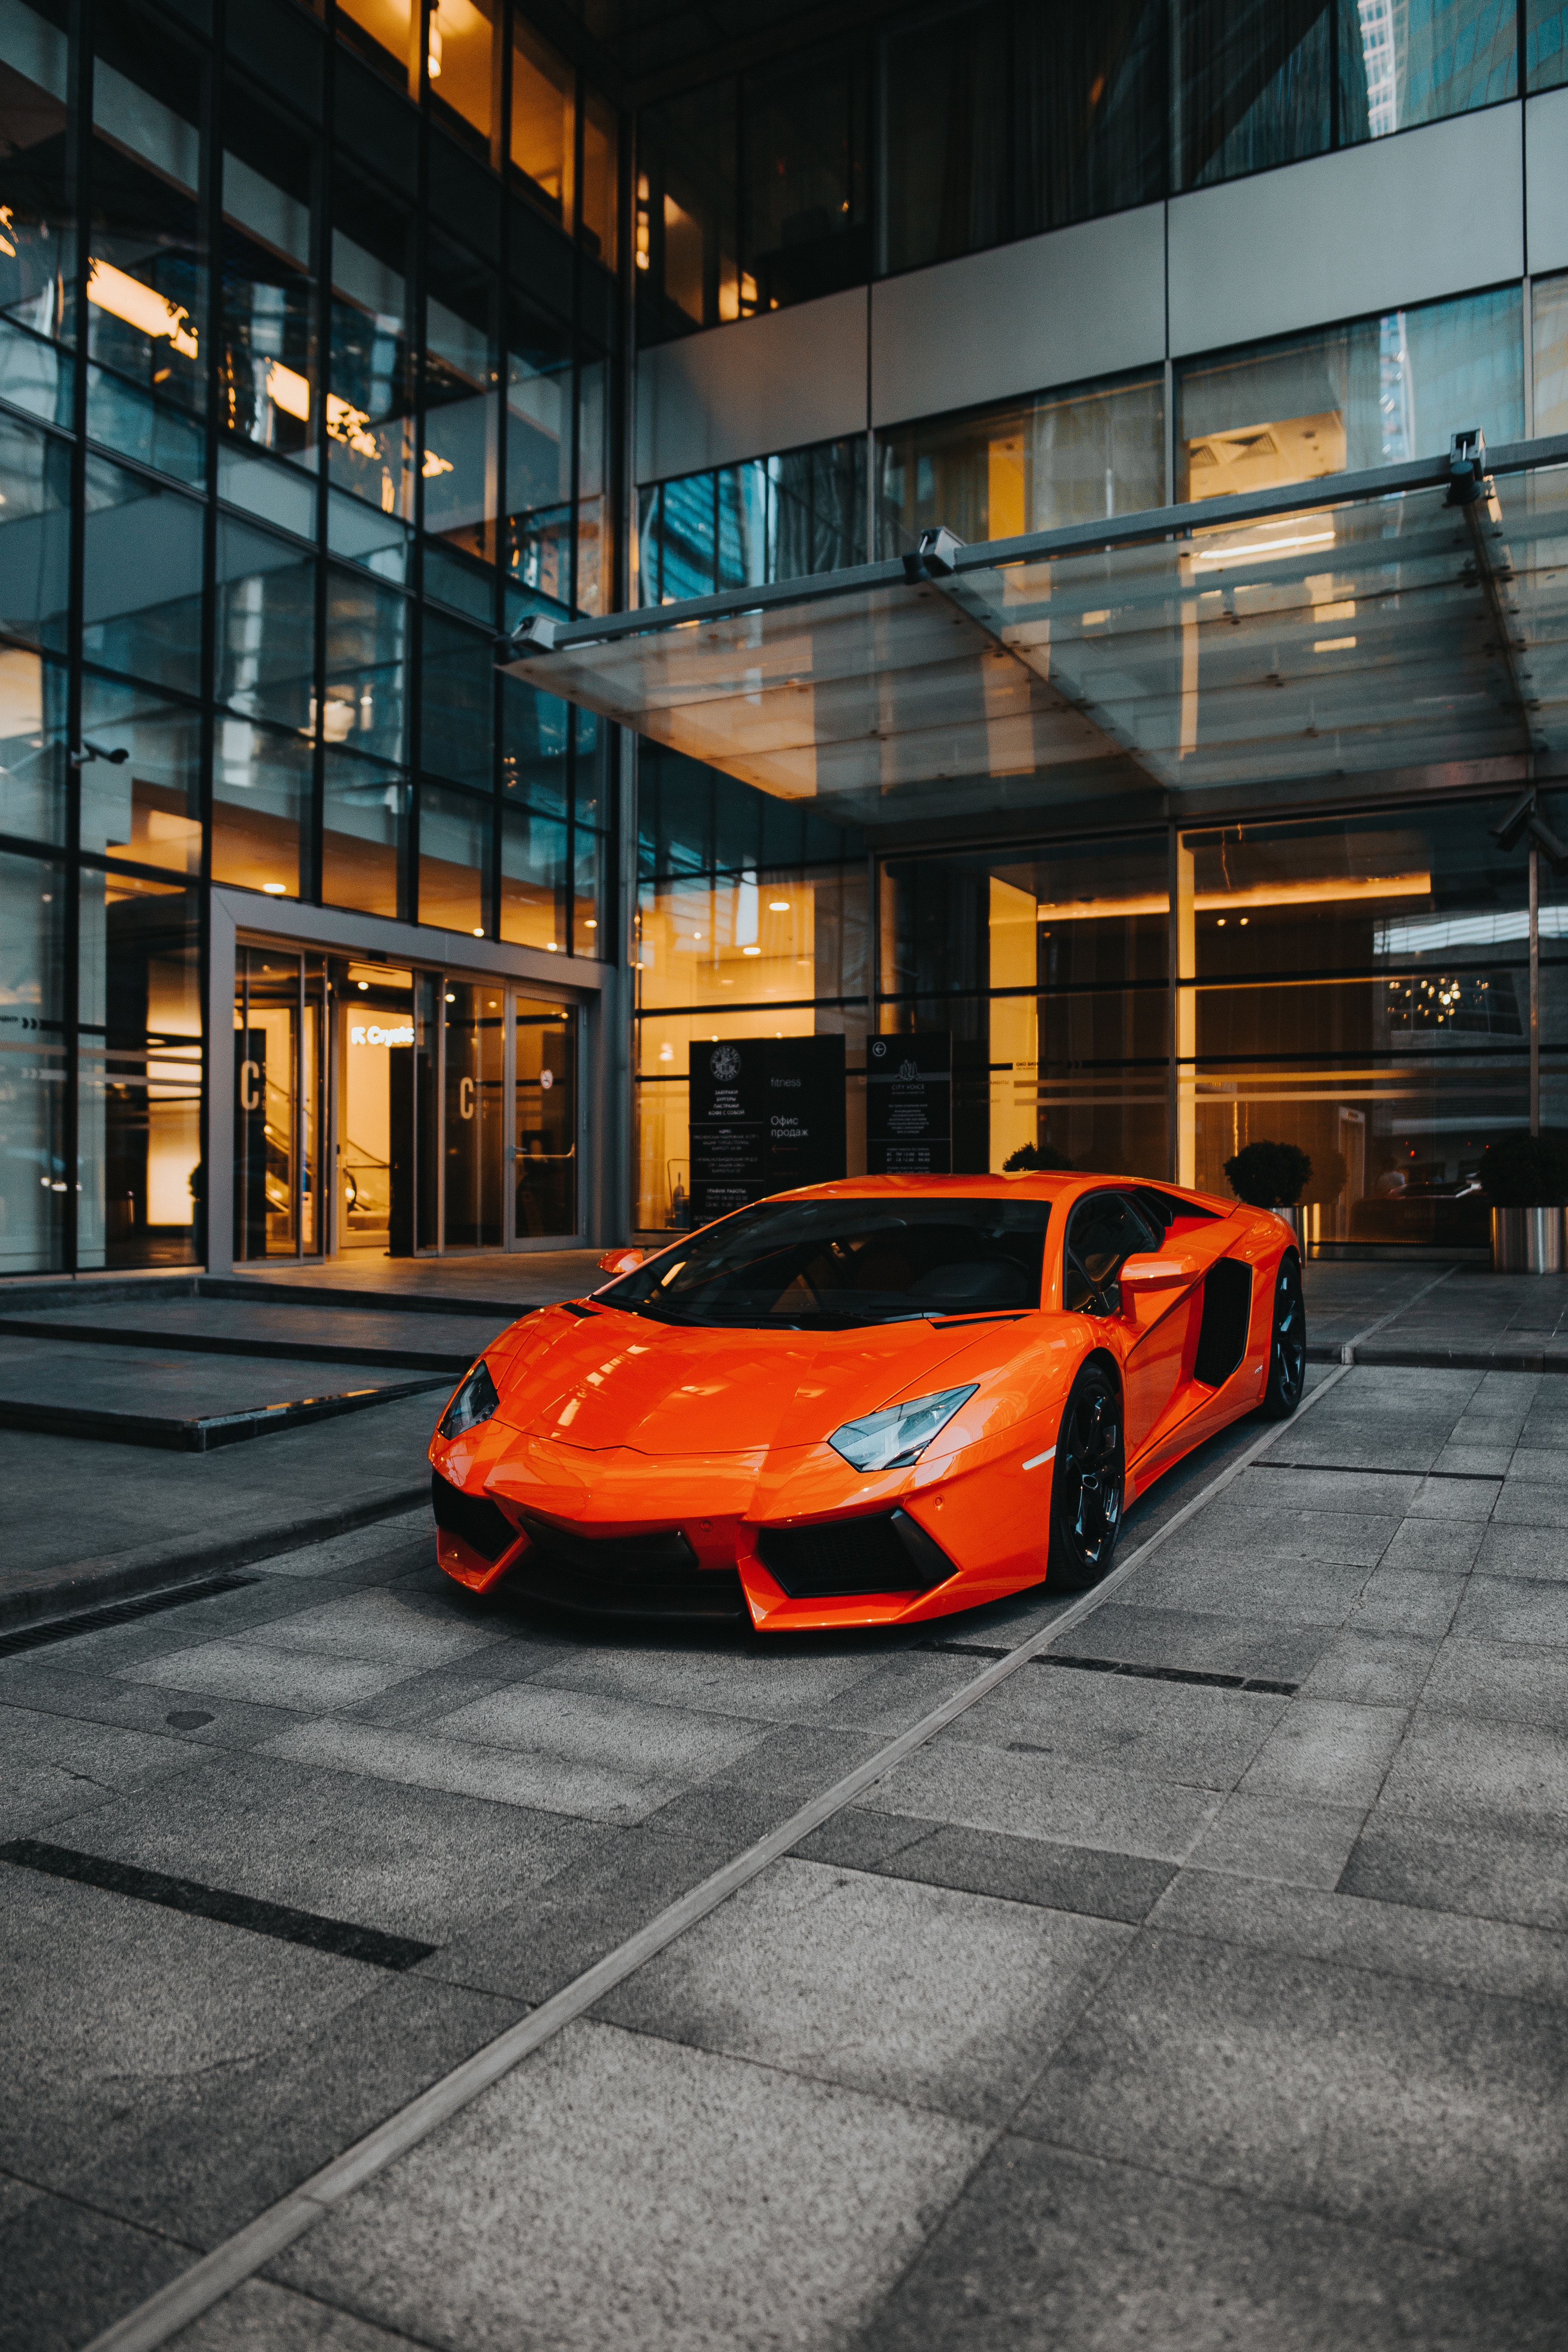 Best Lamborghini Aventador Photo · 100% Free Downloads